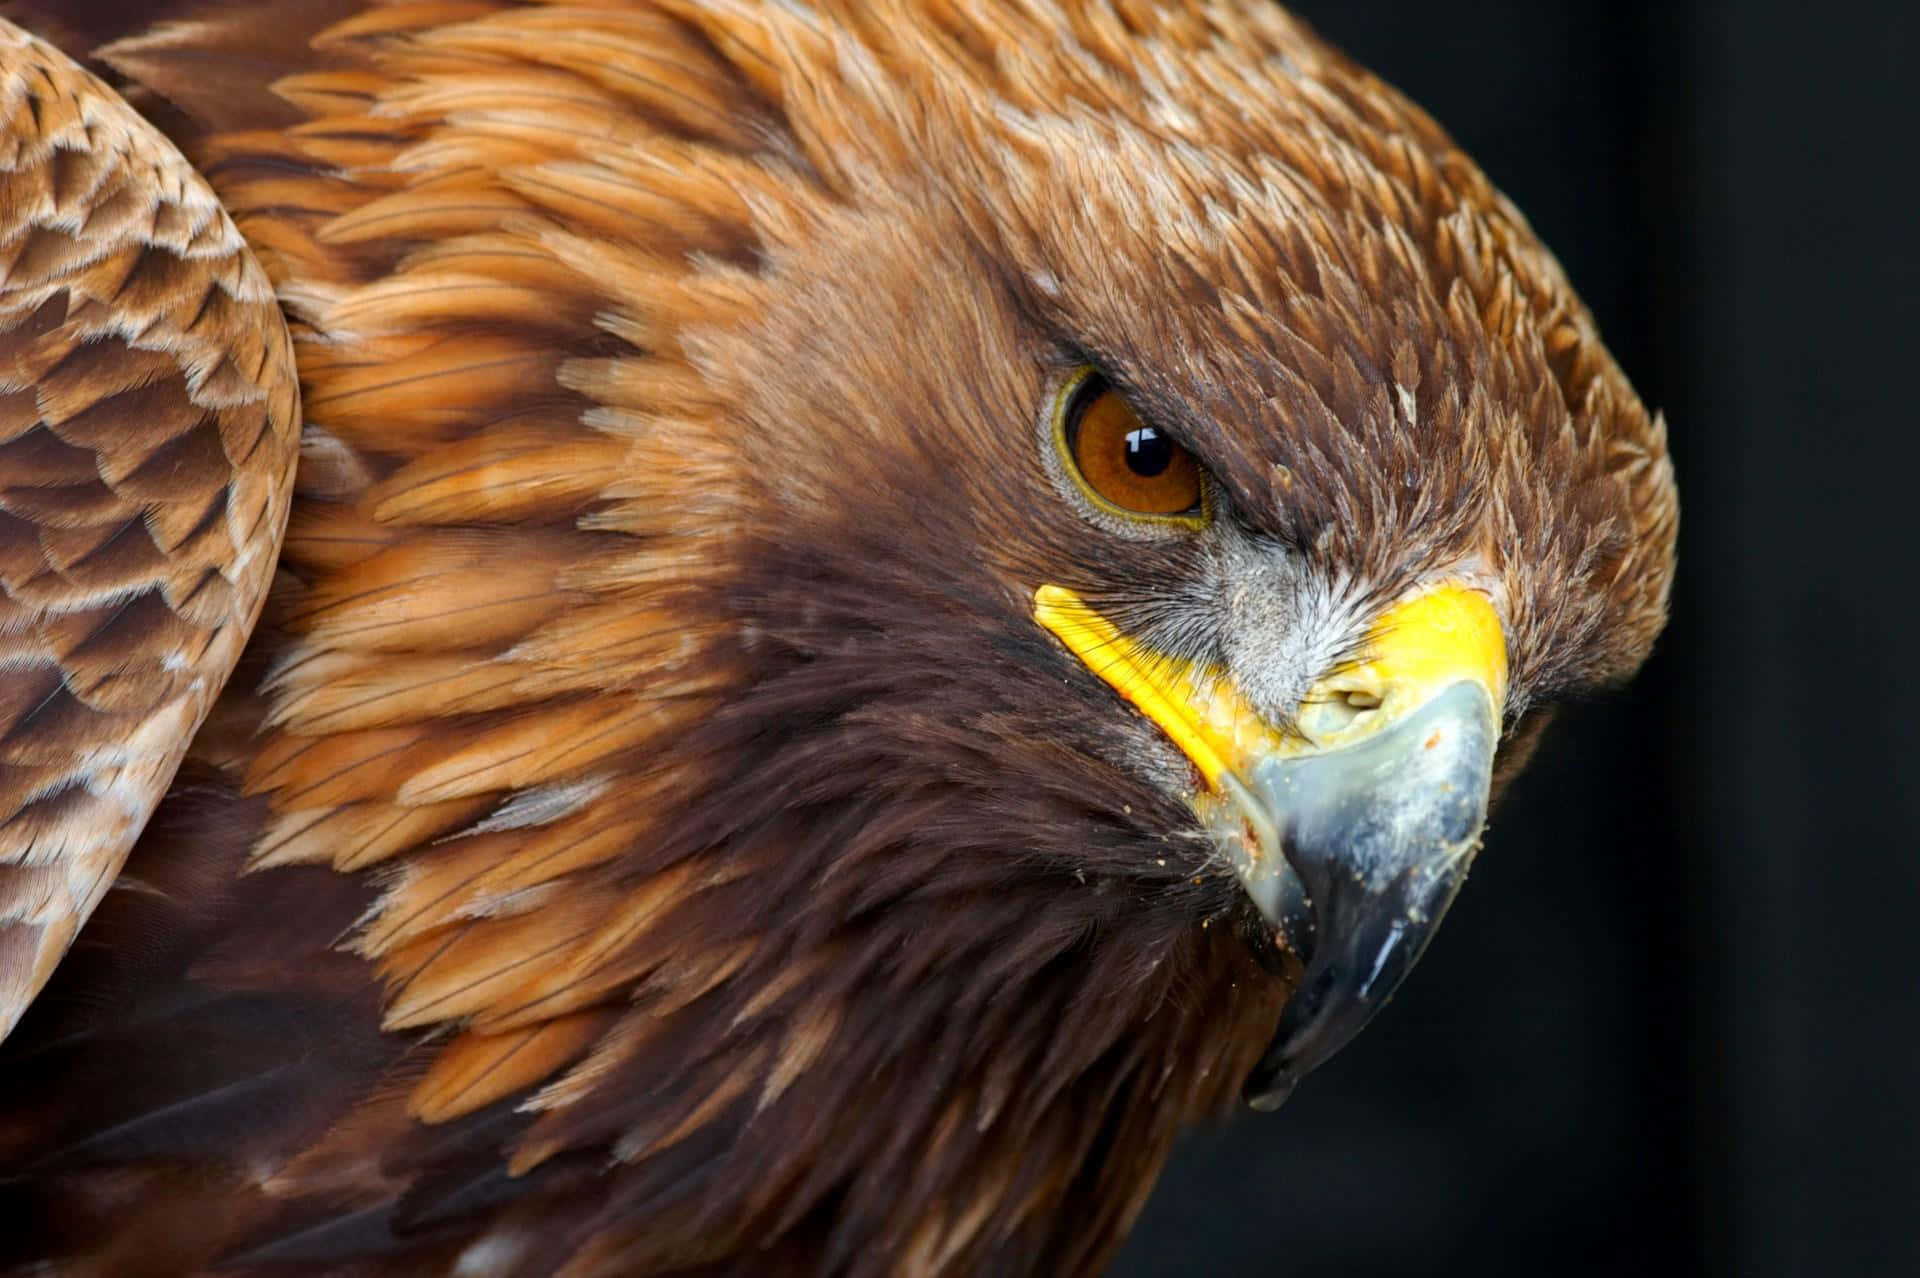 Majestic Golden Eagle Flying in its Natural Habitat